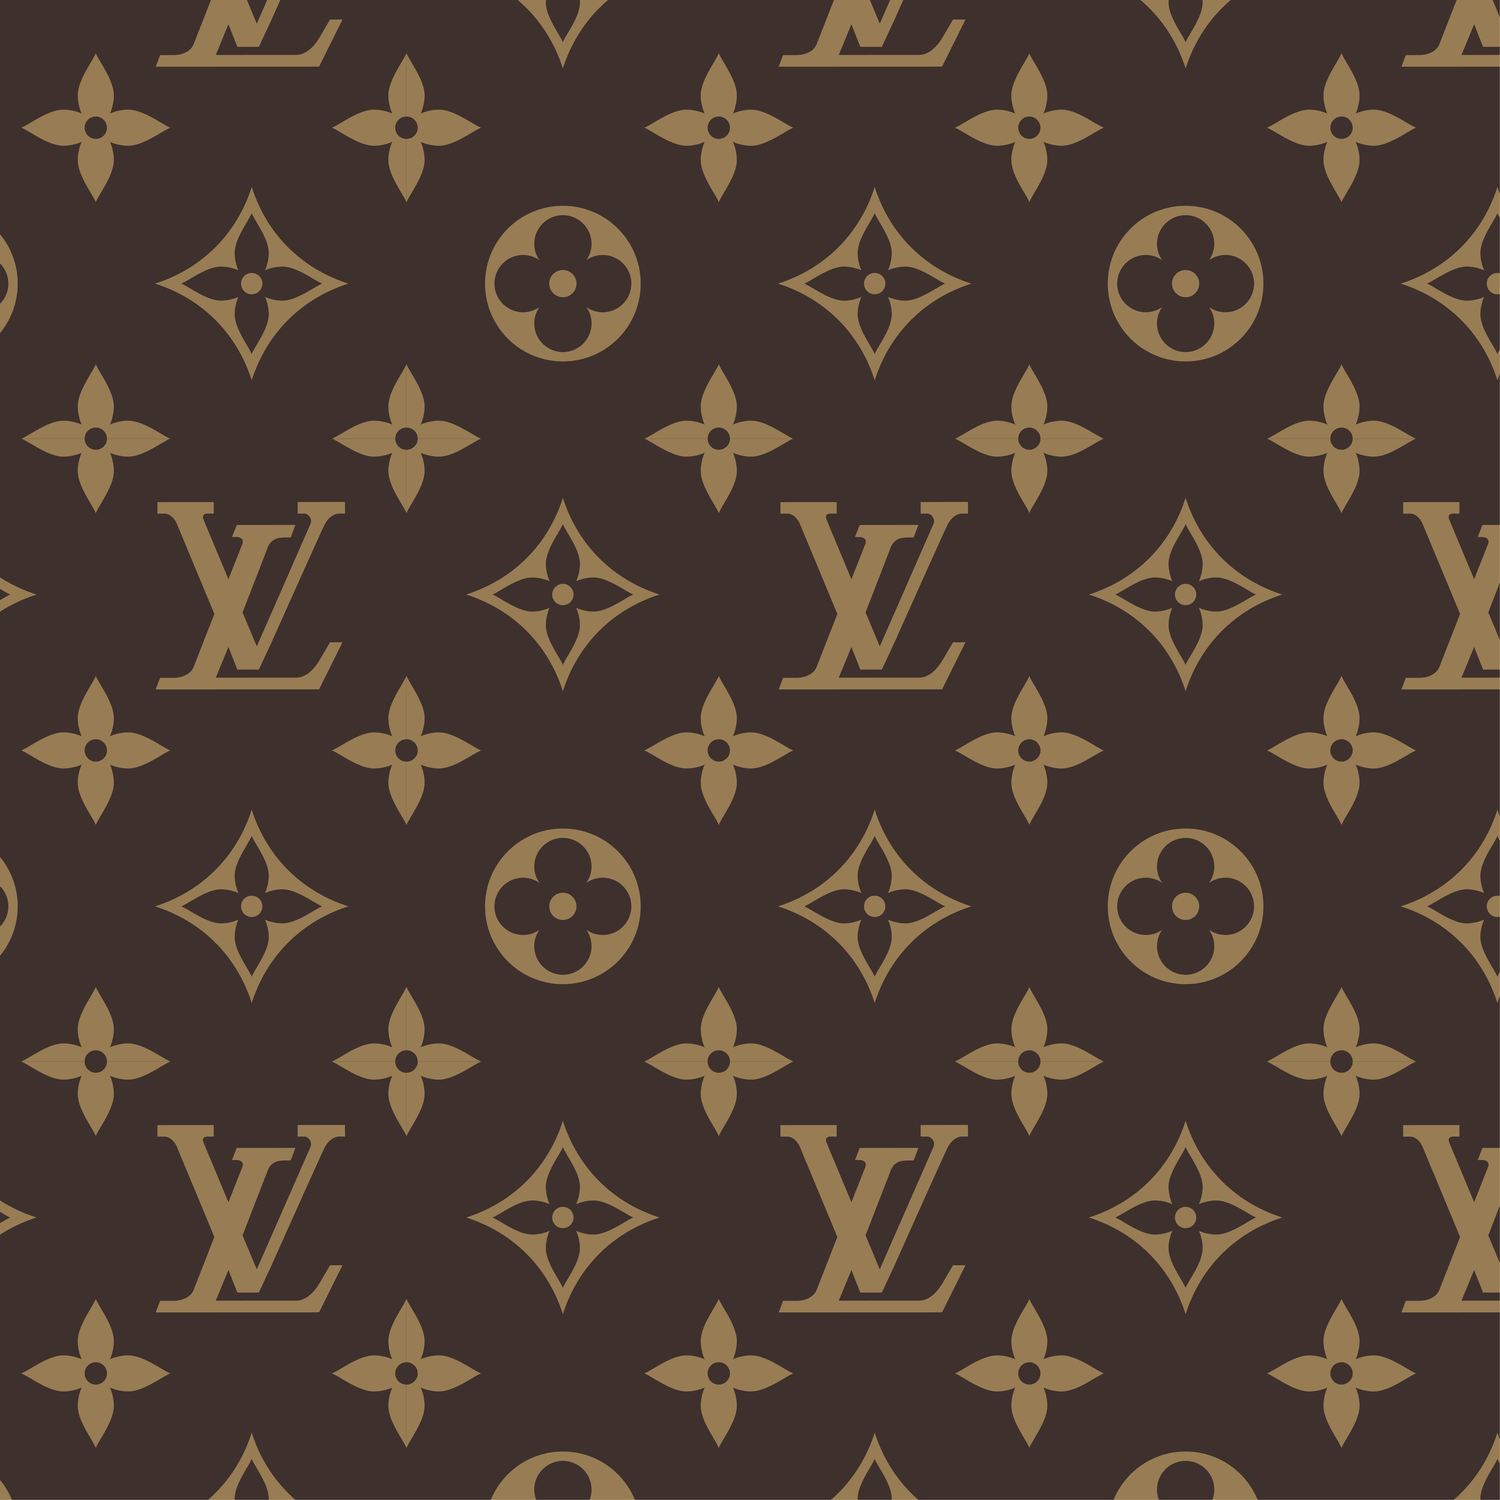 pattern lv logo